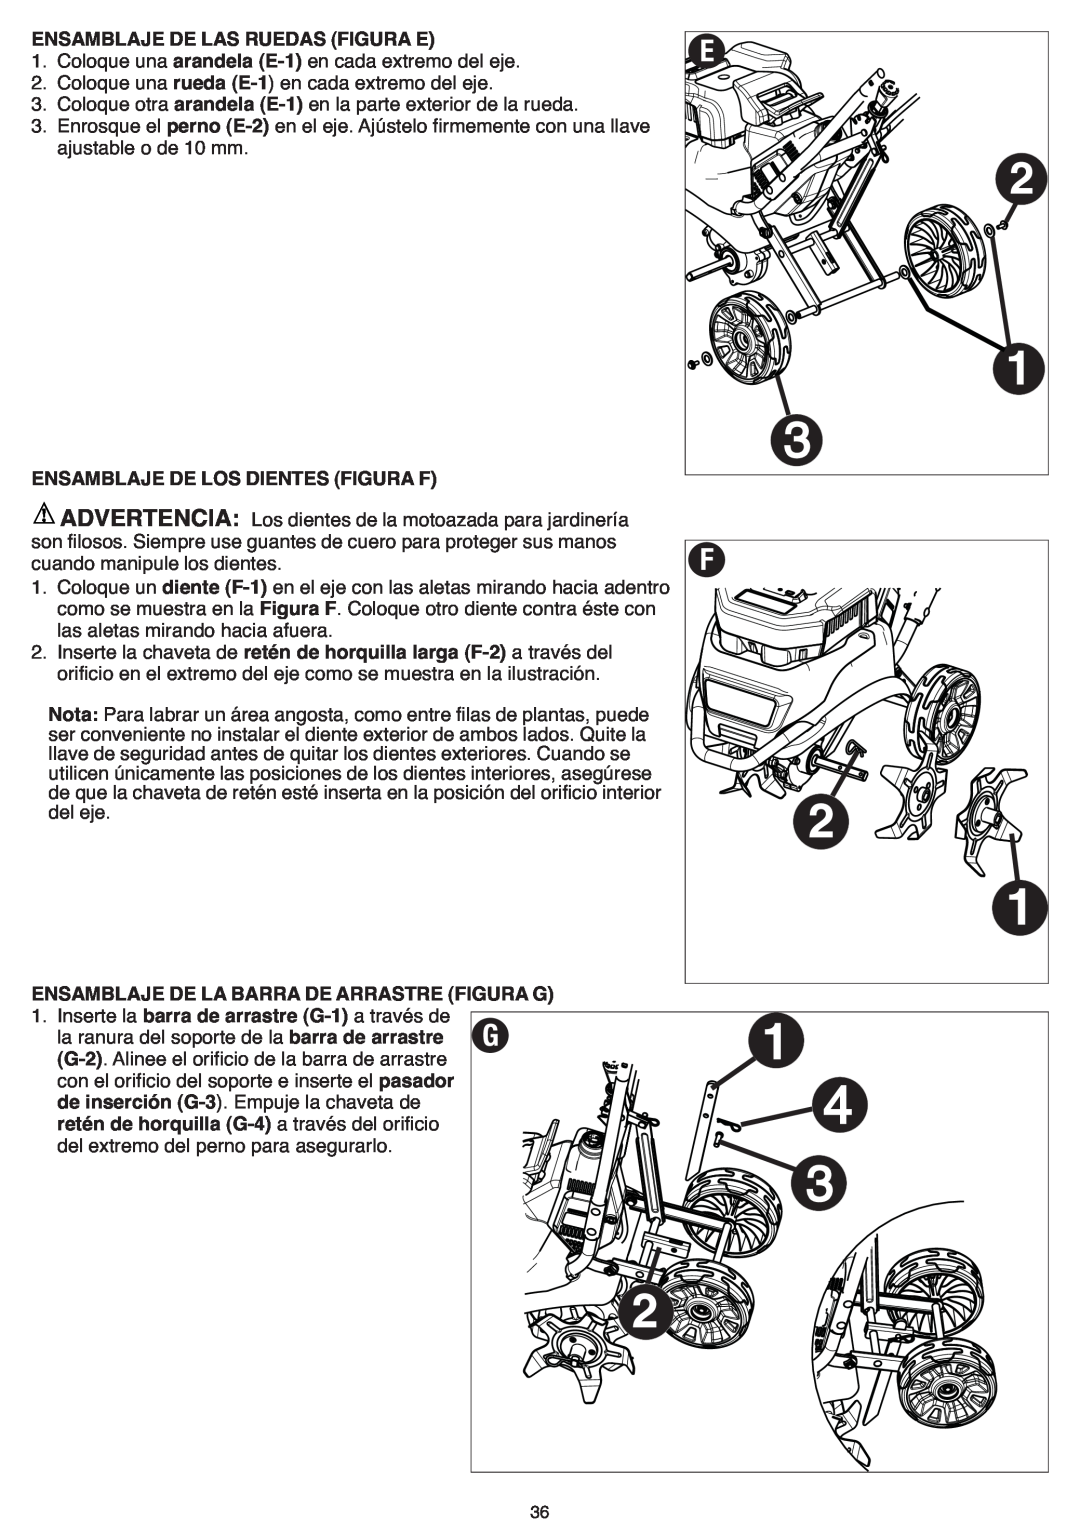 Black & Decker CTL36 instruction manual Ensamblaje De Las Ruedas Figura E, Ensamblaje De Los Dientes Figura F 